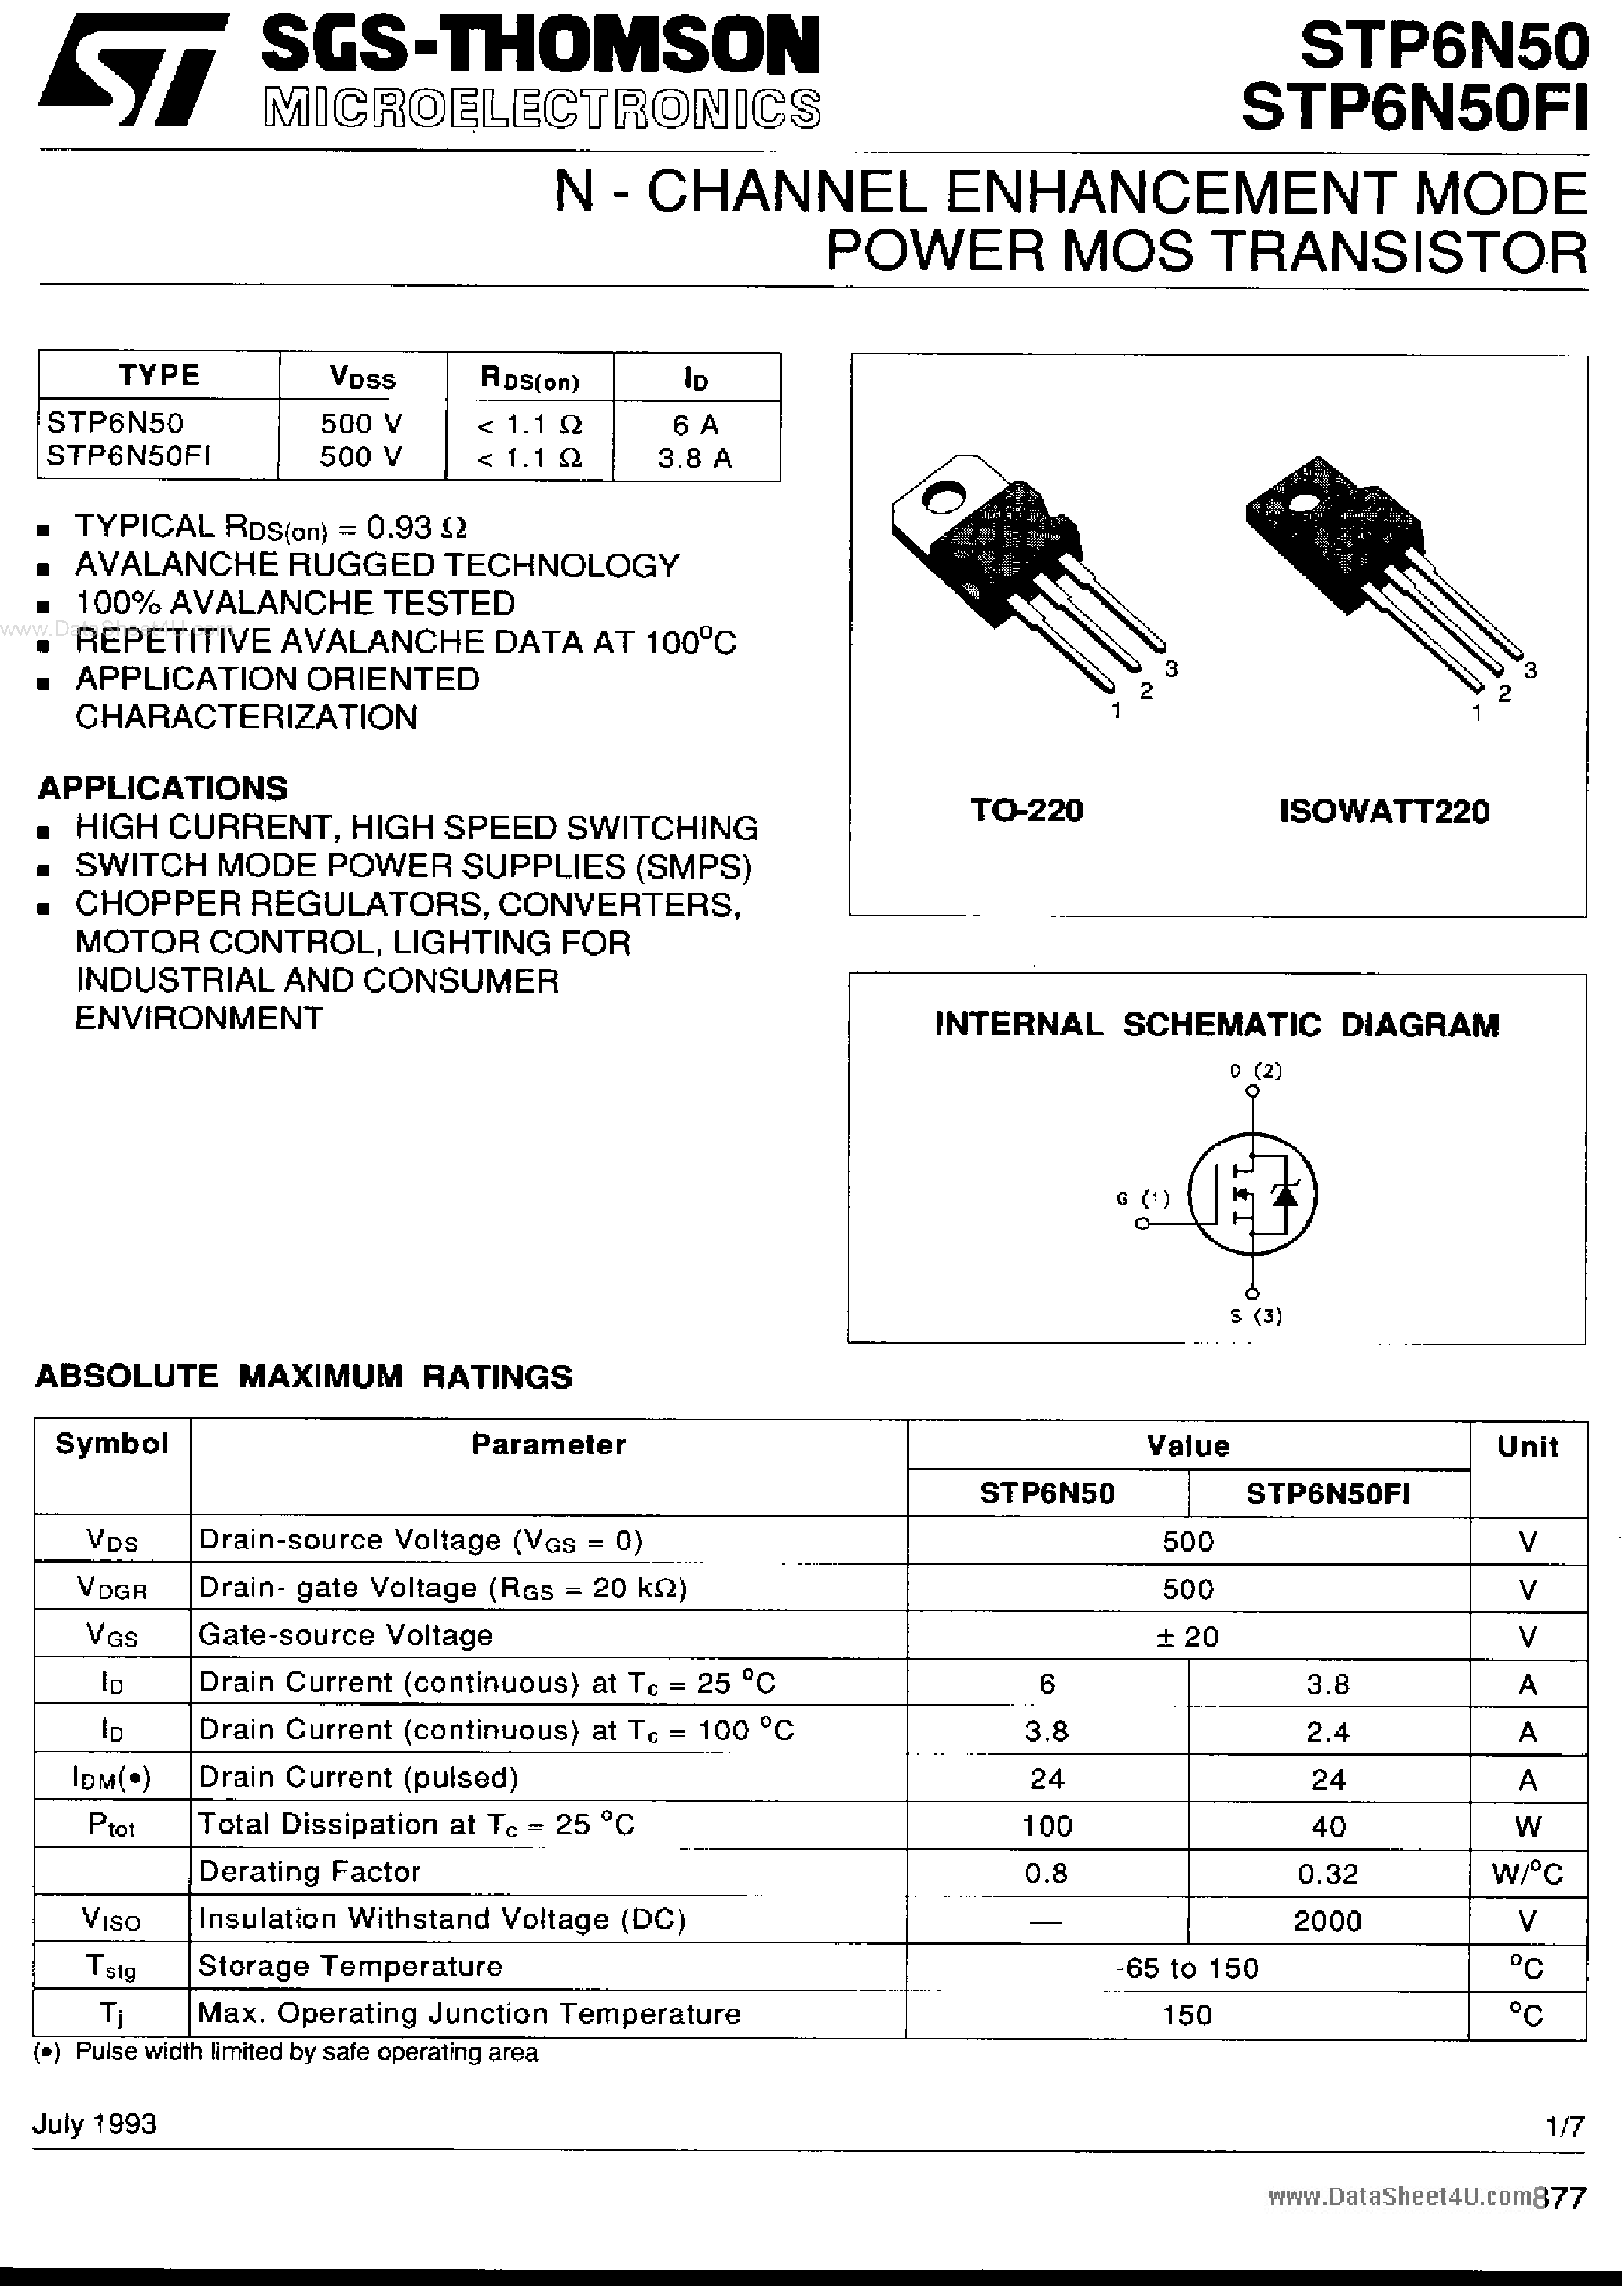 Datasheet STP6N50 - N-CHANNEL ENHANCEMENT MODE POWER MOS TRANSISTOR page 1